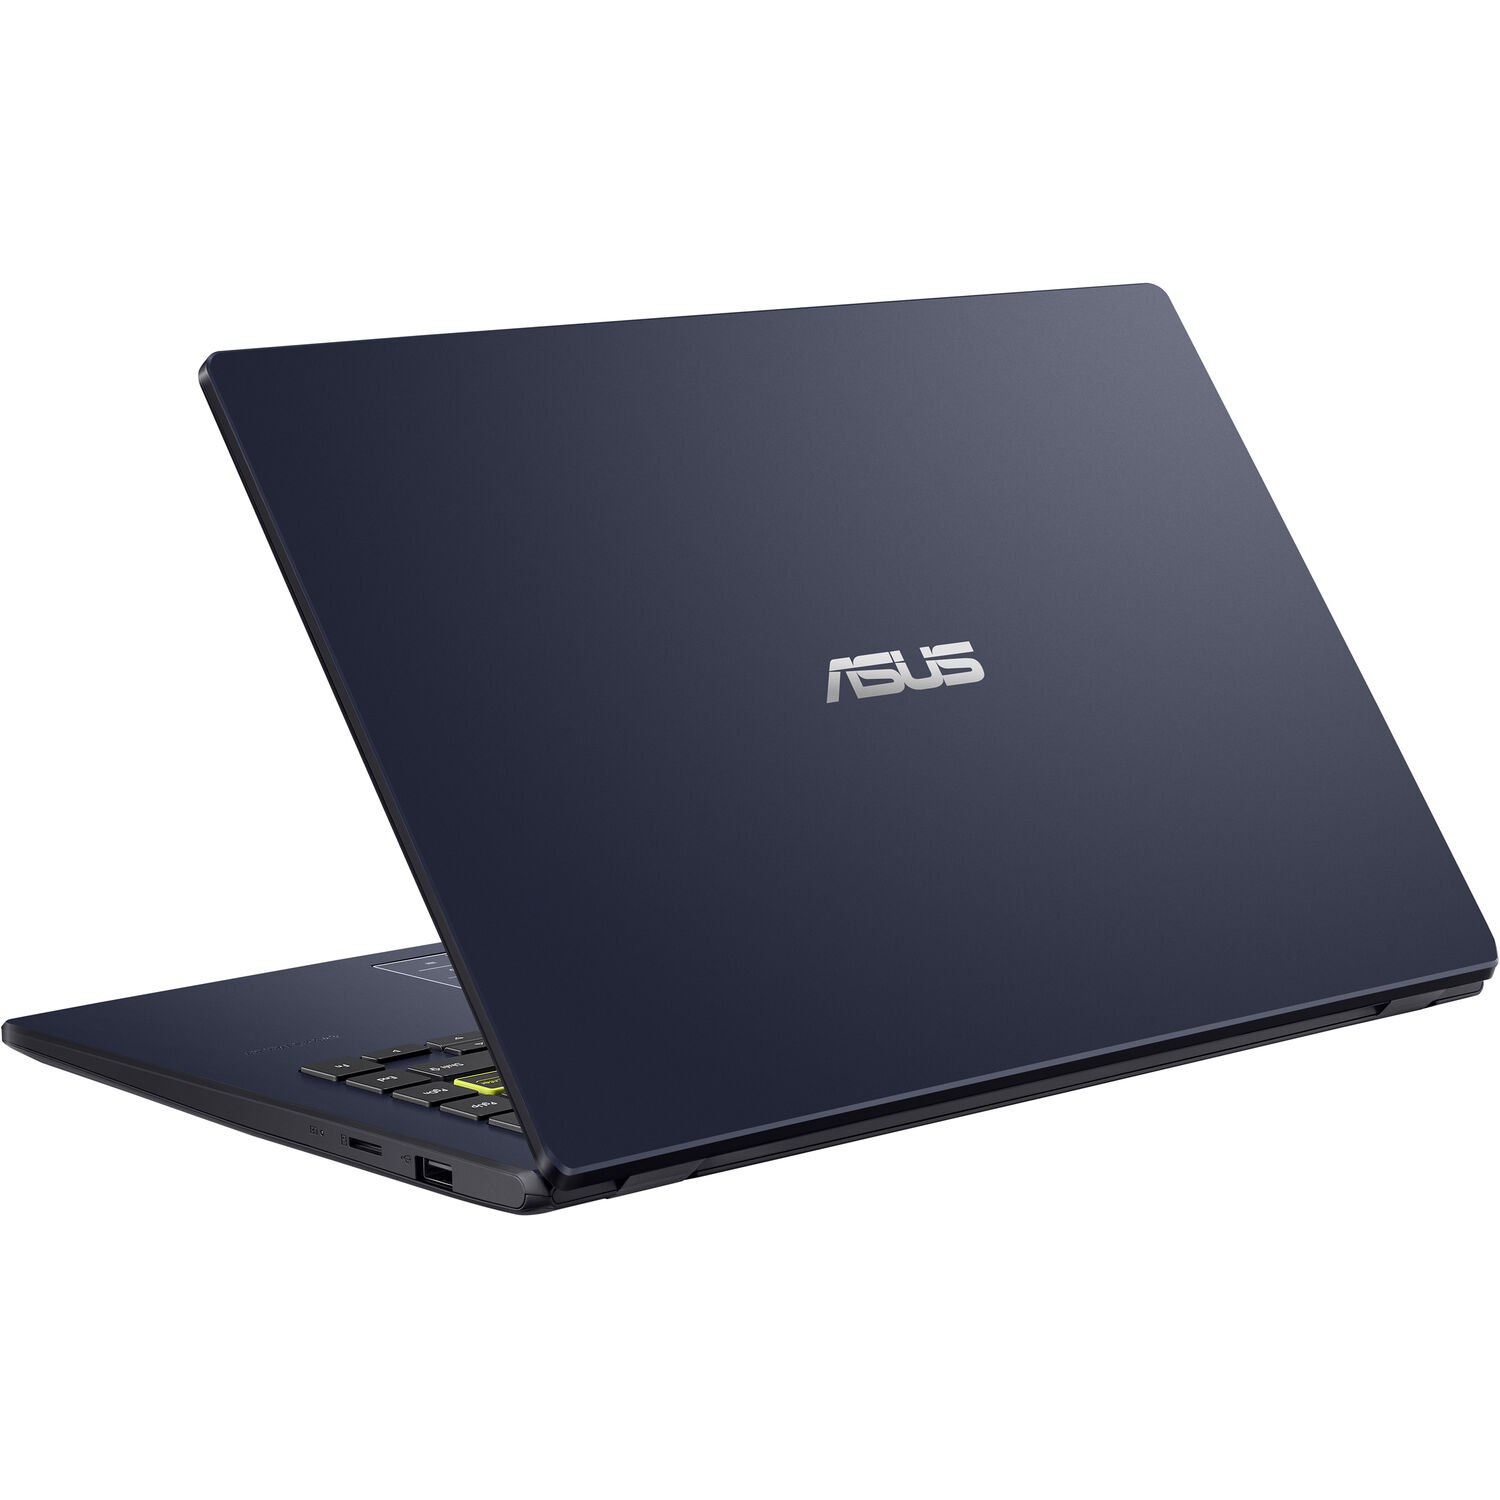 ASUS 14 L410 Everyday Value Laptop (Intel Celeron N4020 2-Core, 4GB RAM, 64GB SSD + 64GB eMMC, 14.0" Full HD (1920x1080), Intel UHD 600, Wifi, Bluetooth, Webcam, 1xUSB 3.2, 1xHDMI, Win 10 Home) - image 6 of 6